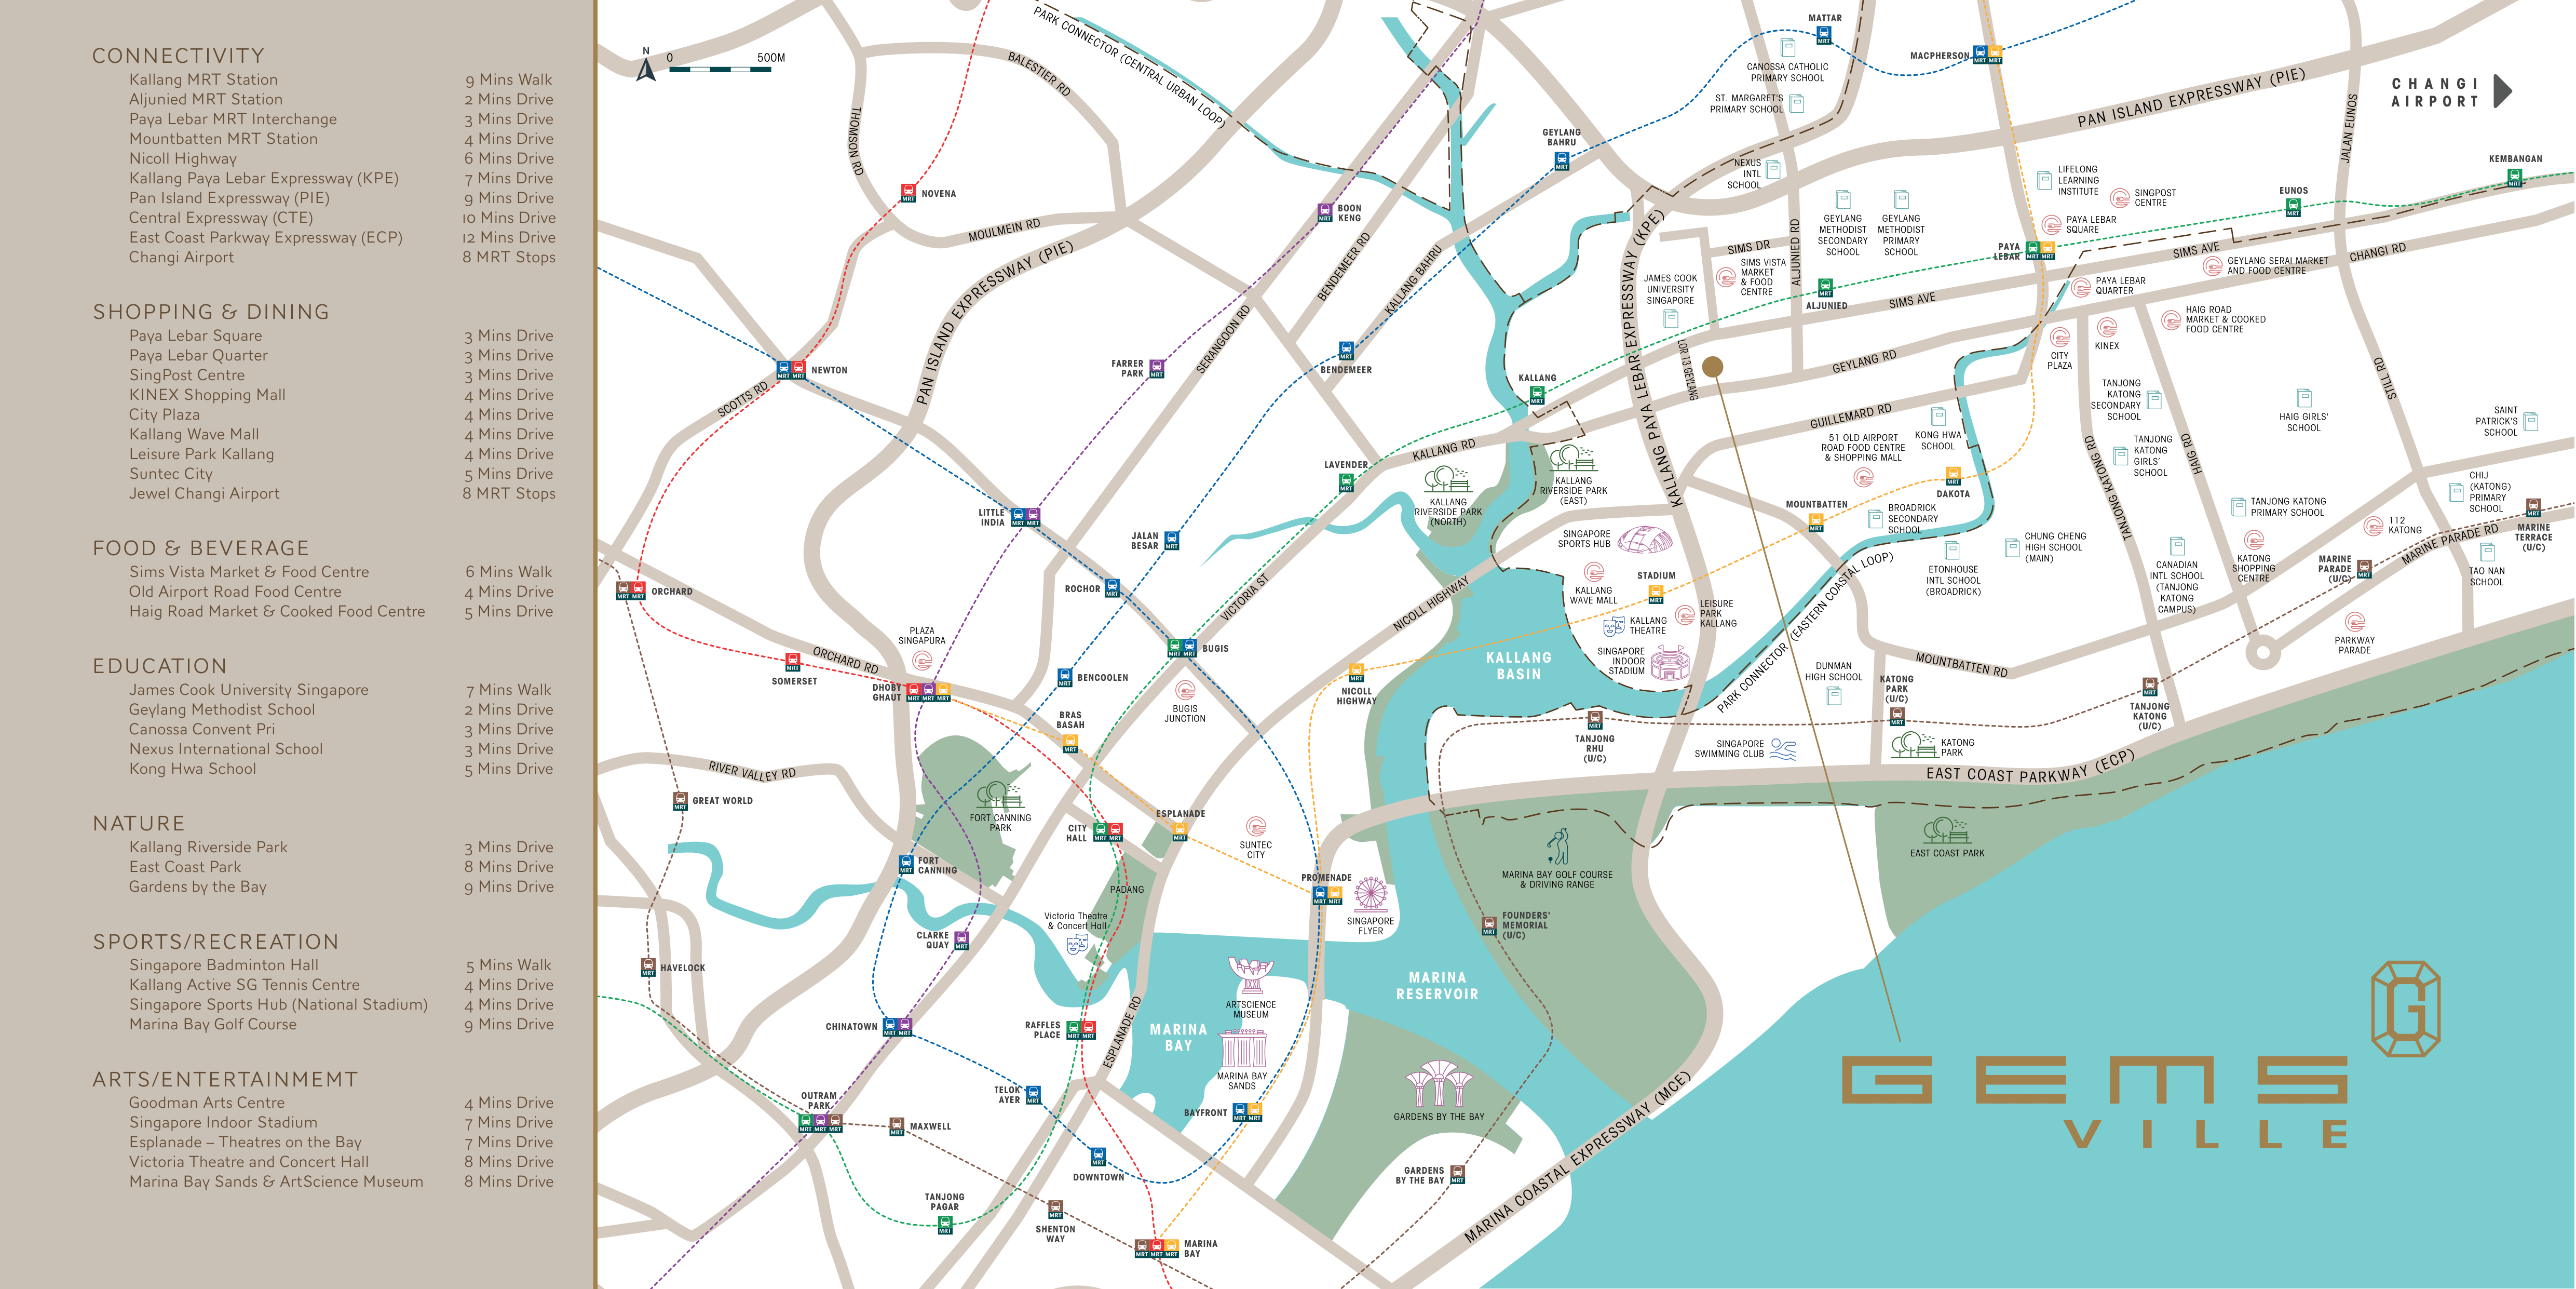 Gems Ville Location Map